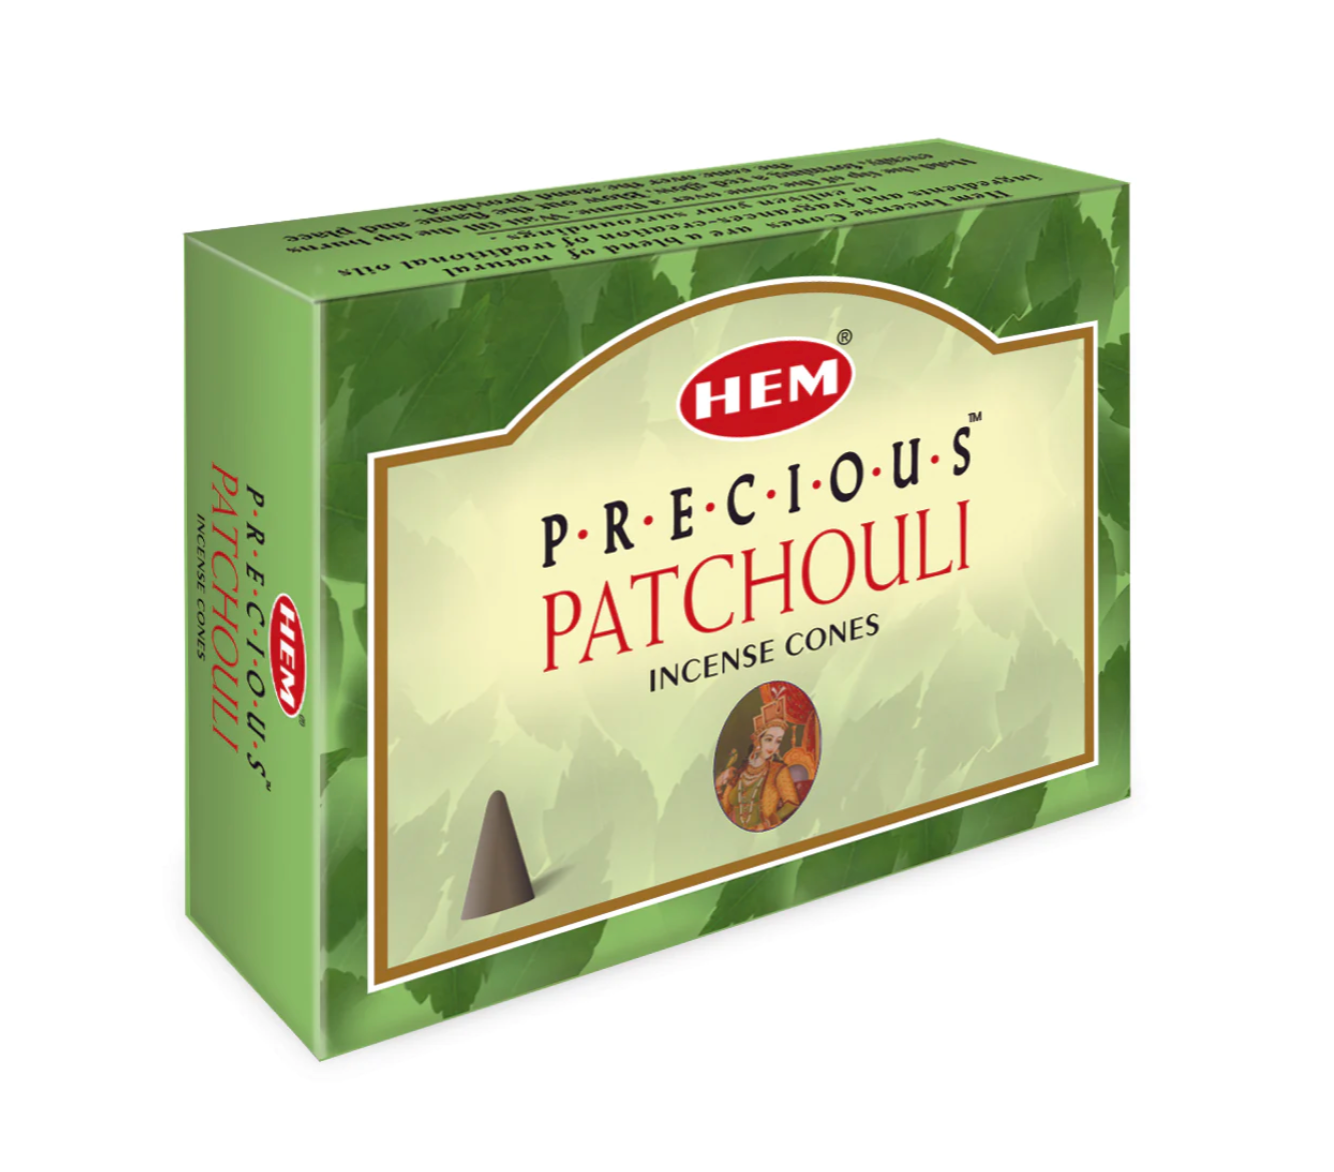 Hem Precious Patchouli Incense Cones